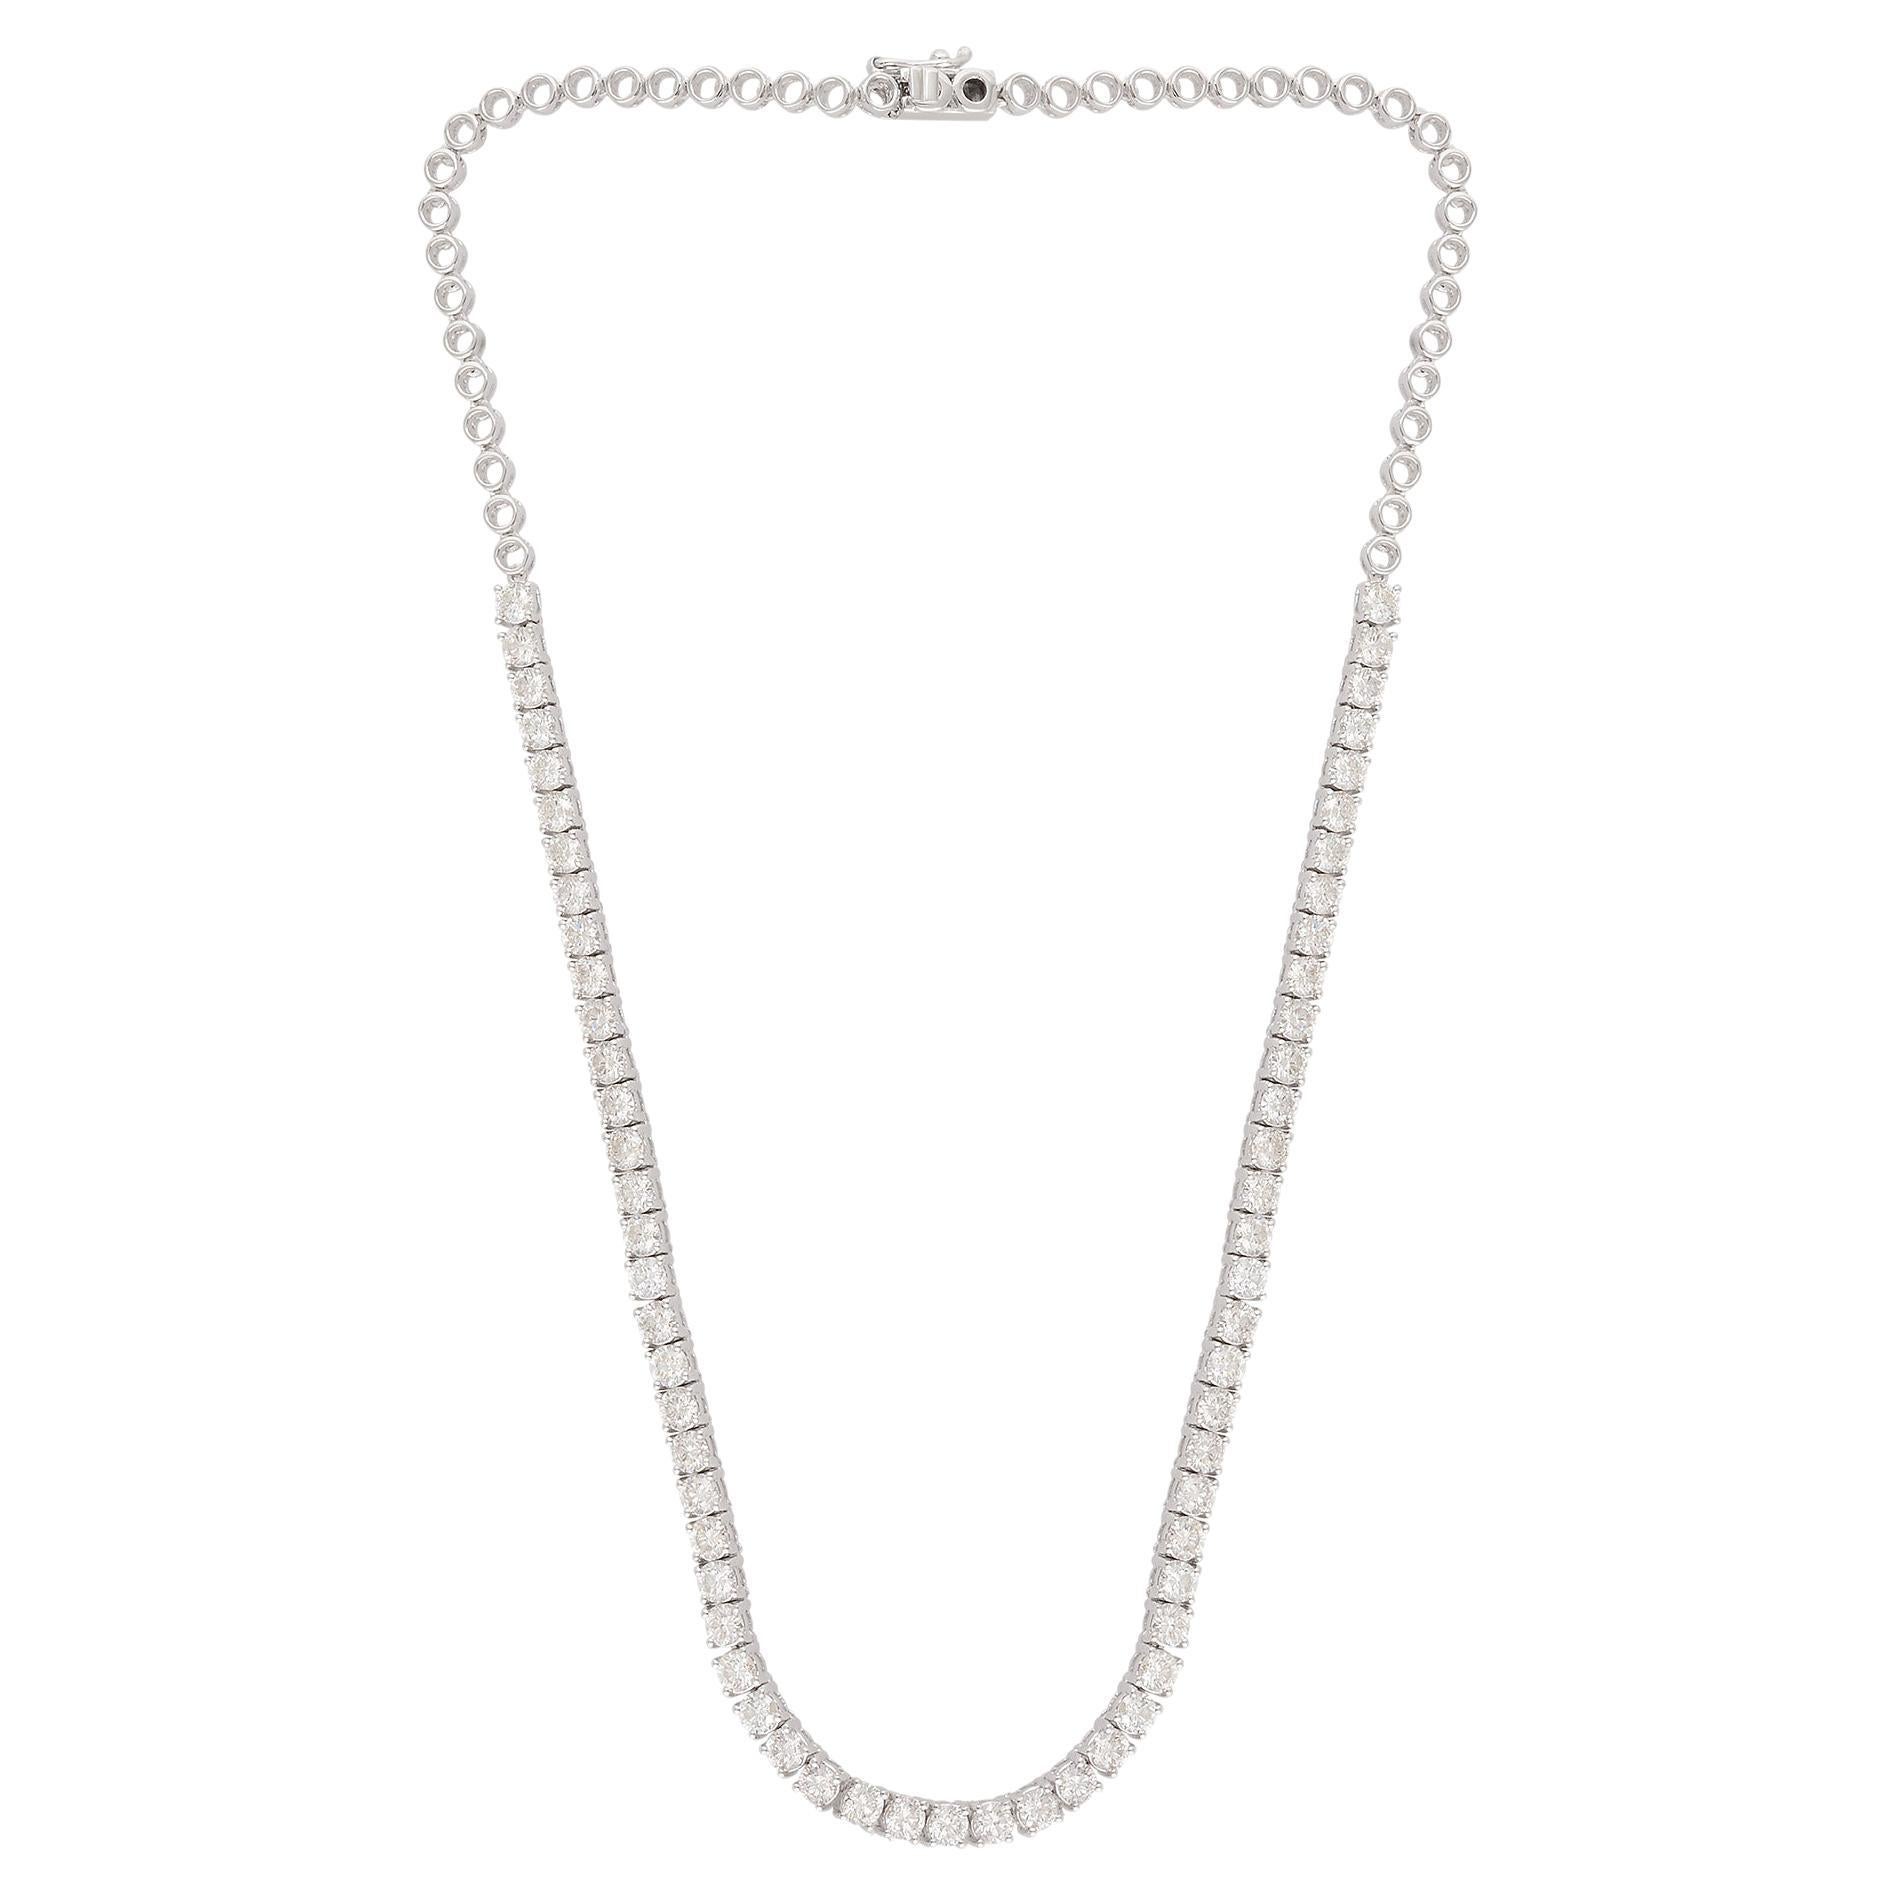 Real 9.25 Carat Diamond Choker Necklace 14 Karat White Gold Handmade Jewelry For Sale